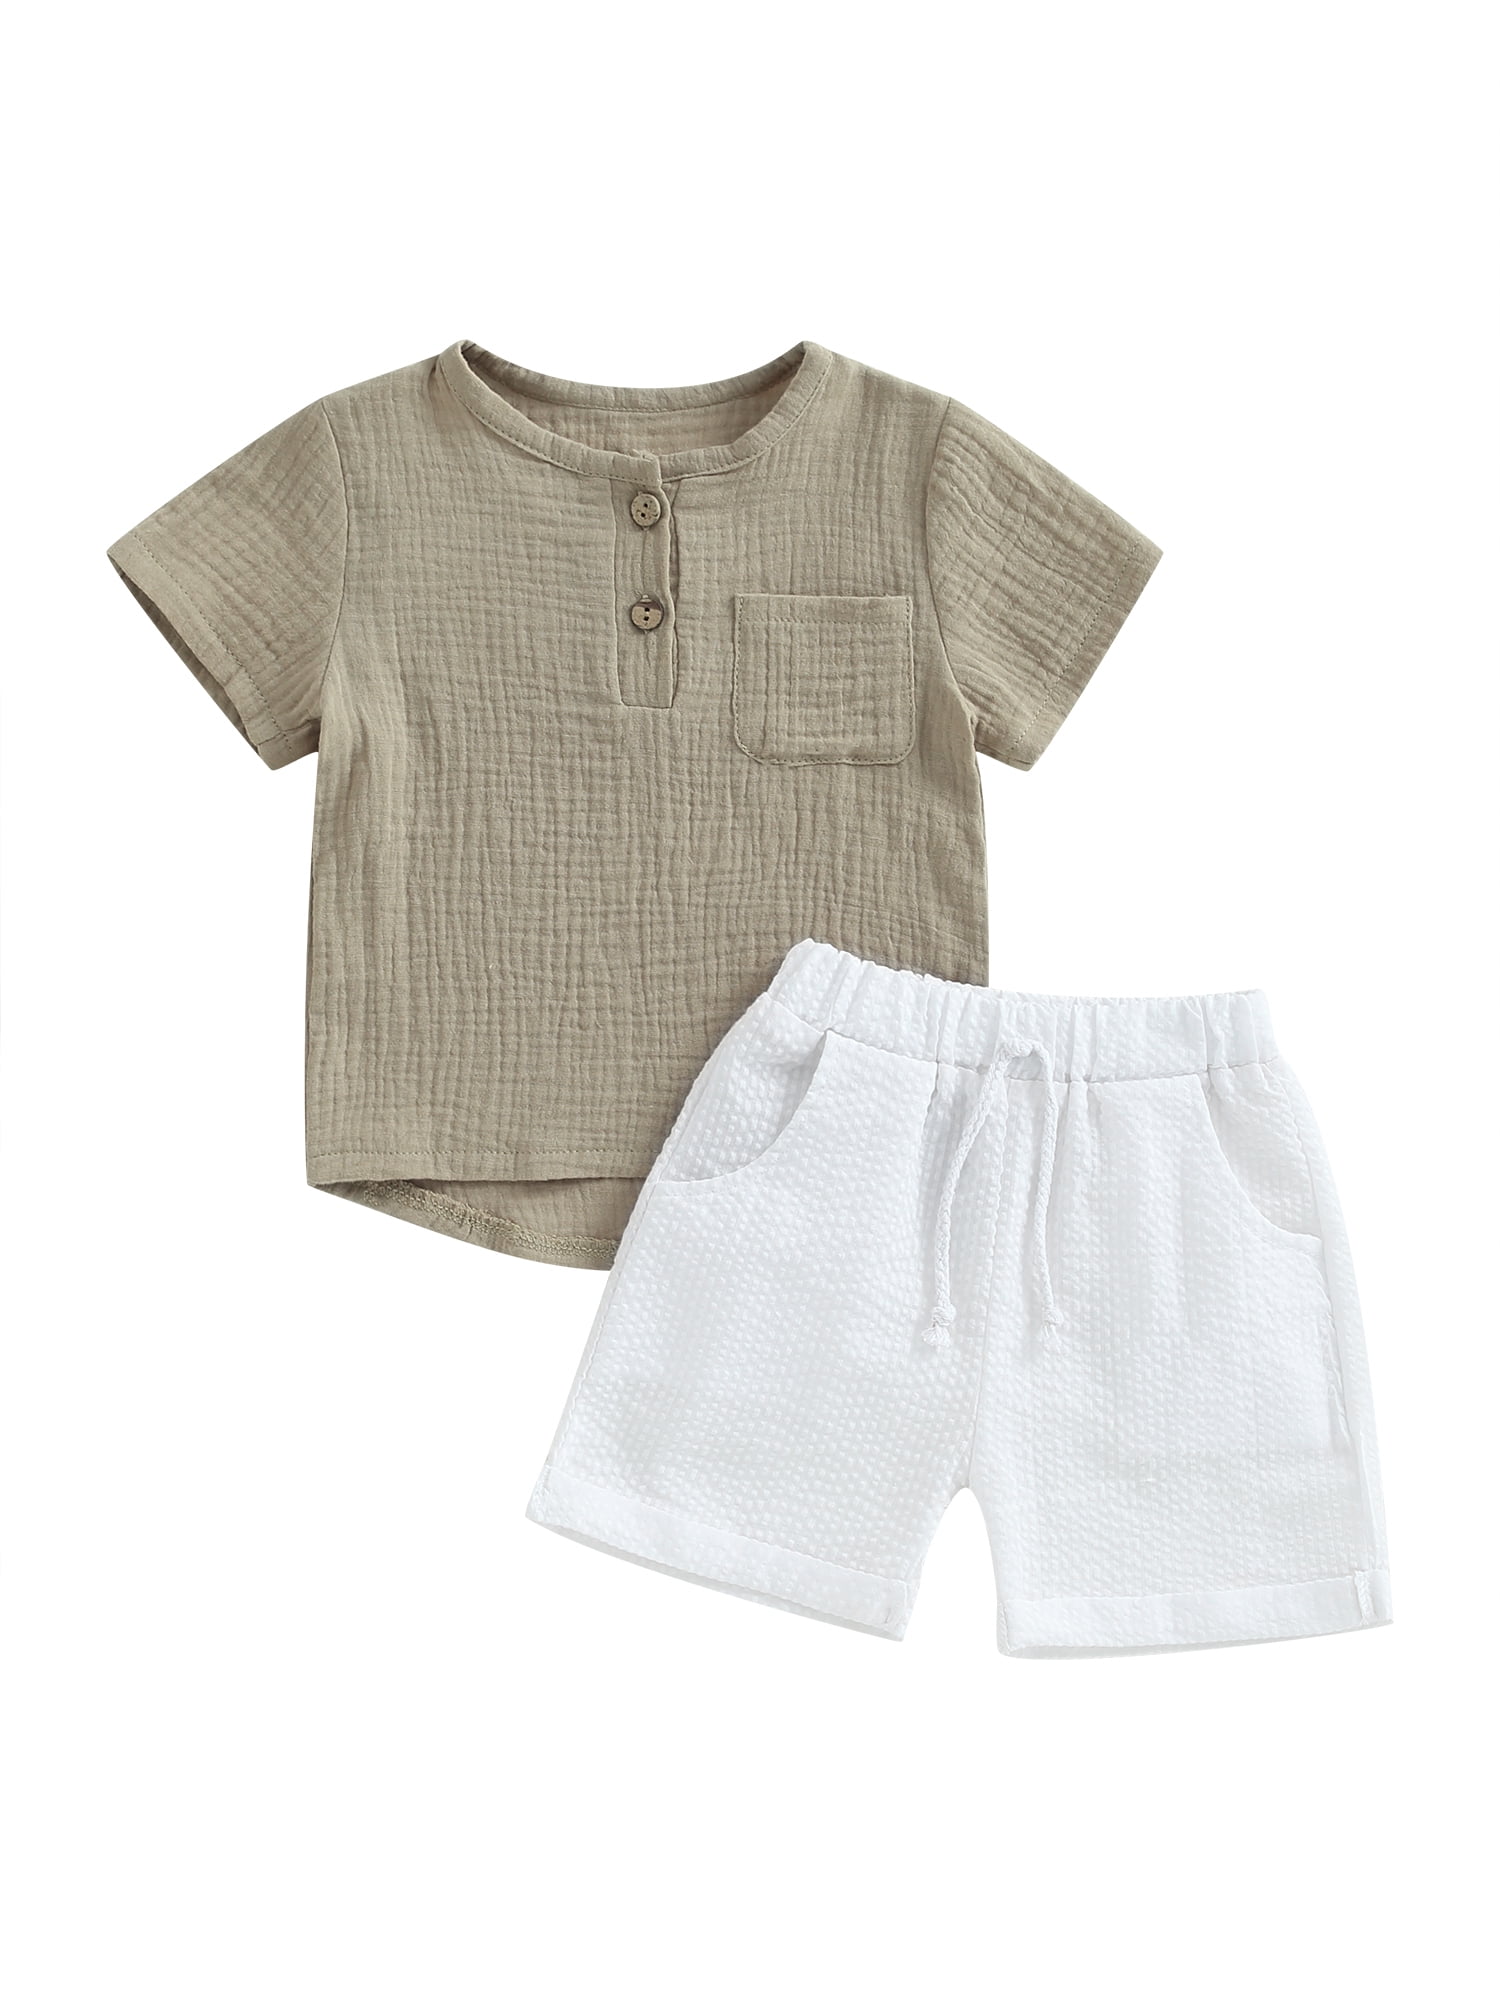 Biayxms Toddler Boys 2PCS Shorts Sets Solid Color Short Sleeve Tops and ...